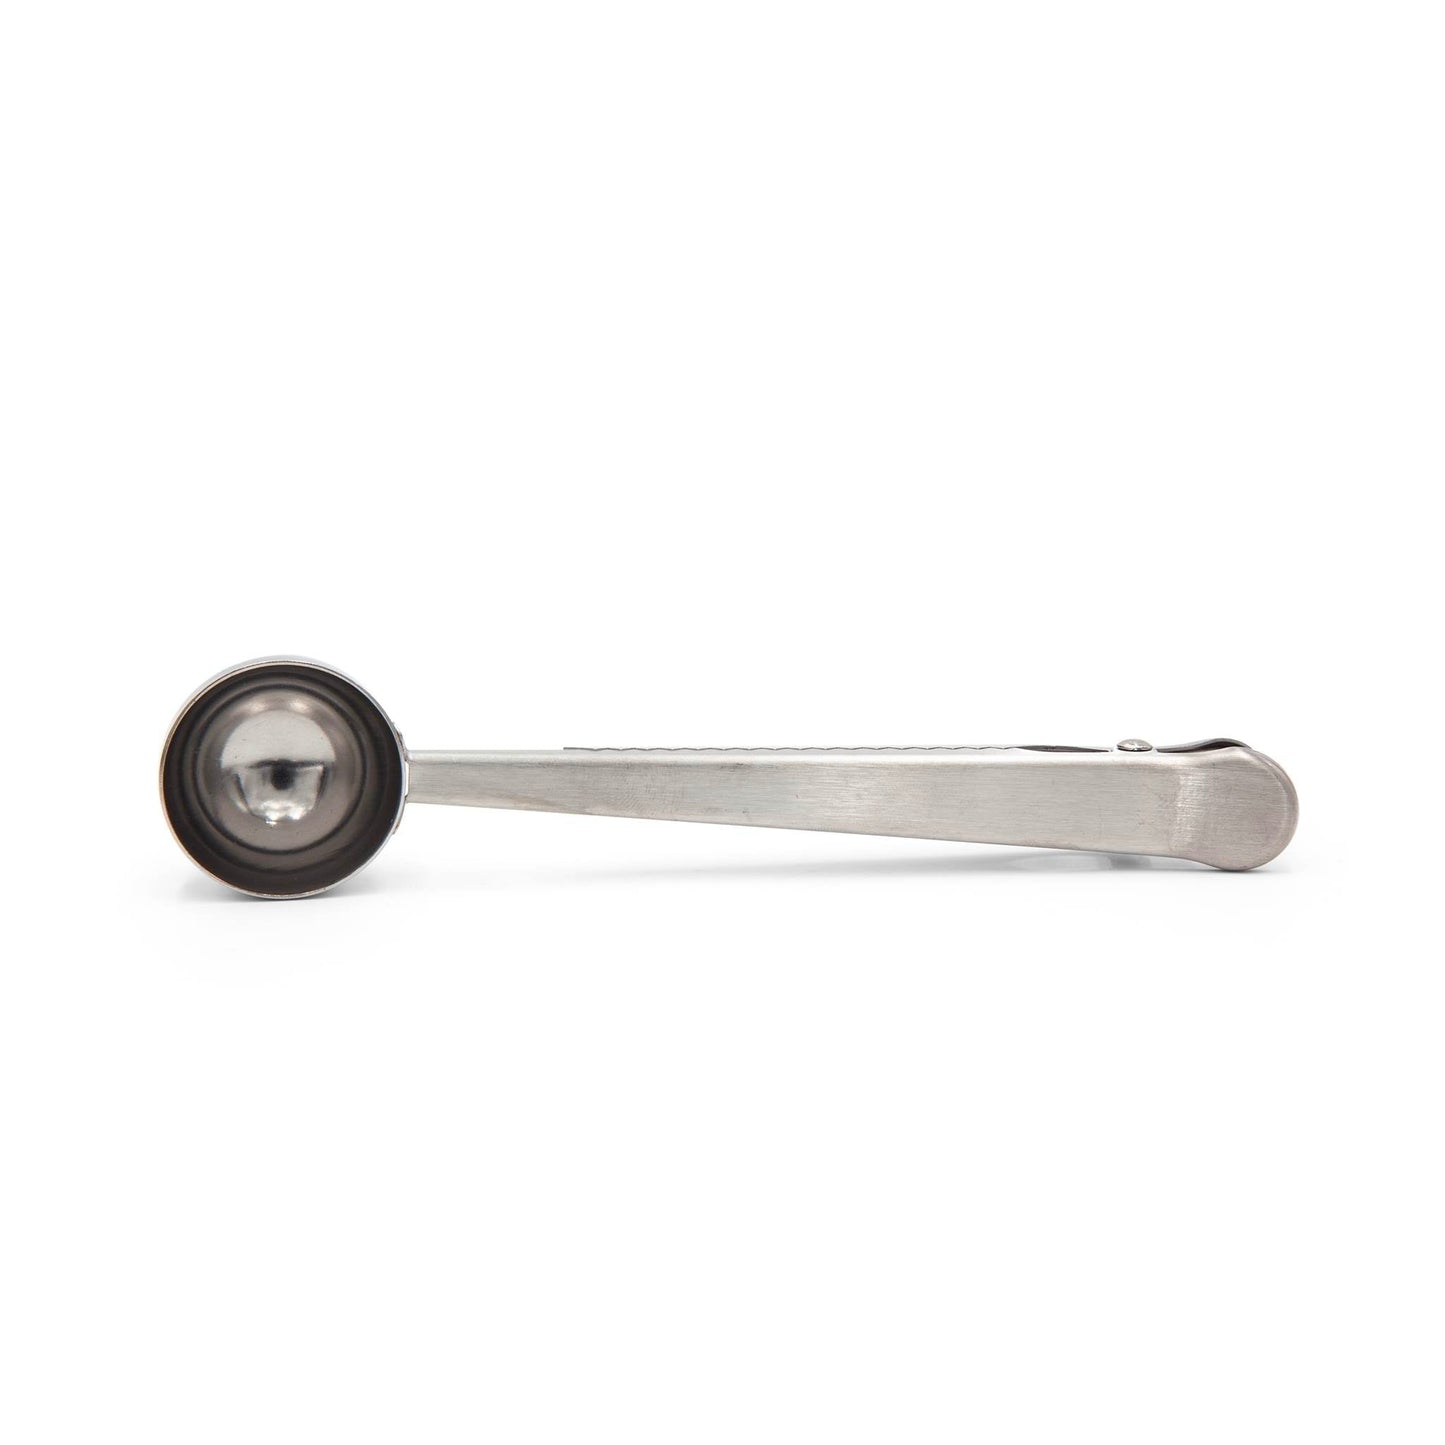 SoStraw Kitchen Tools & Utensils Measuring Scoop with Bag Sealing Clip